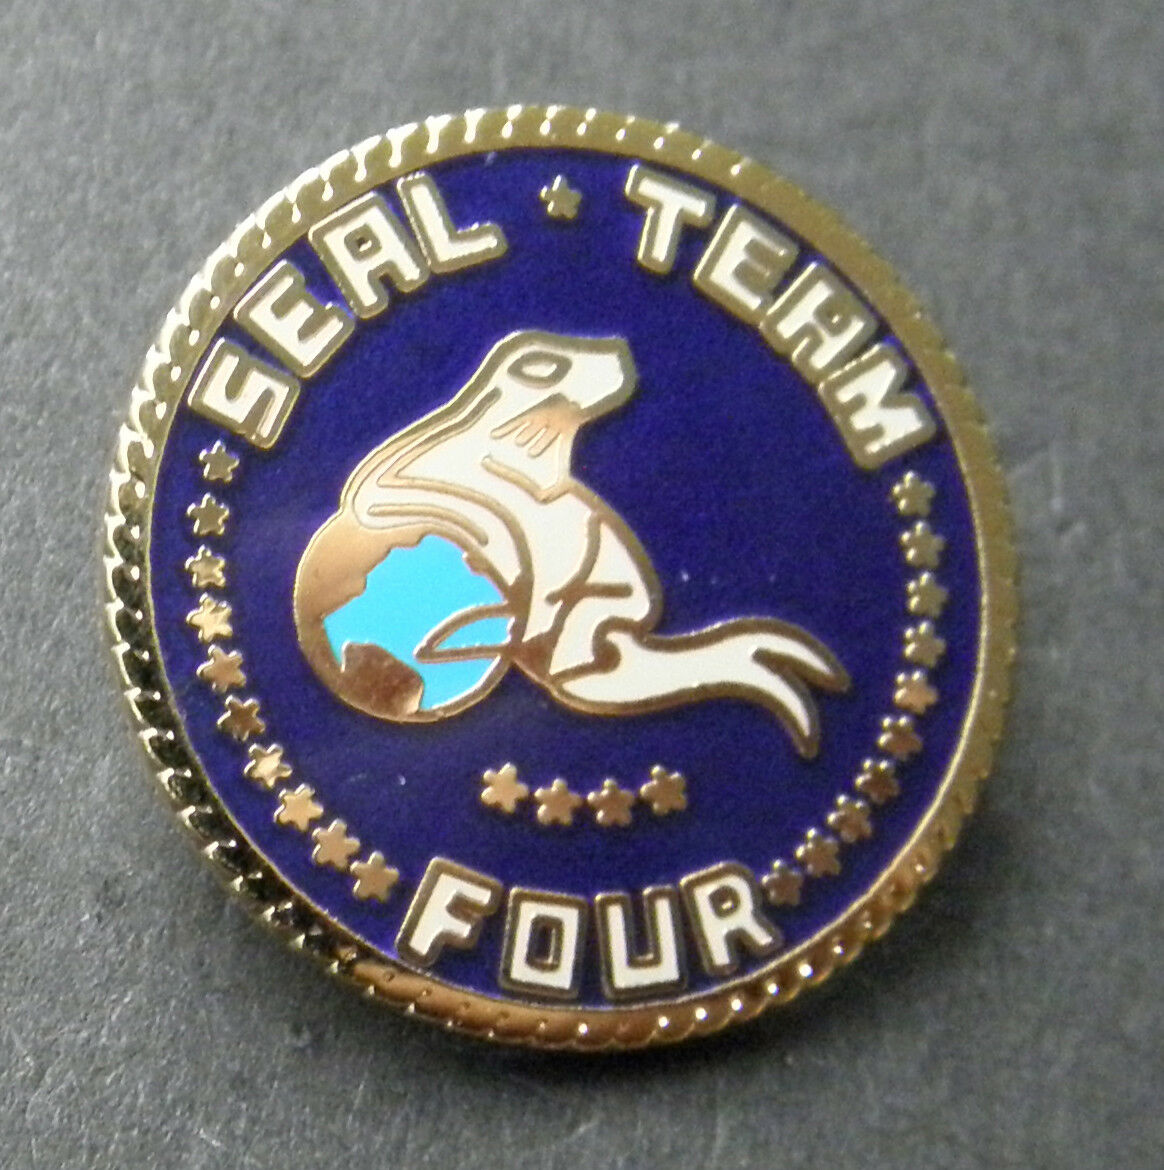 seal team 4 logo